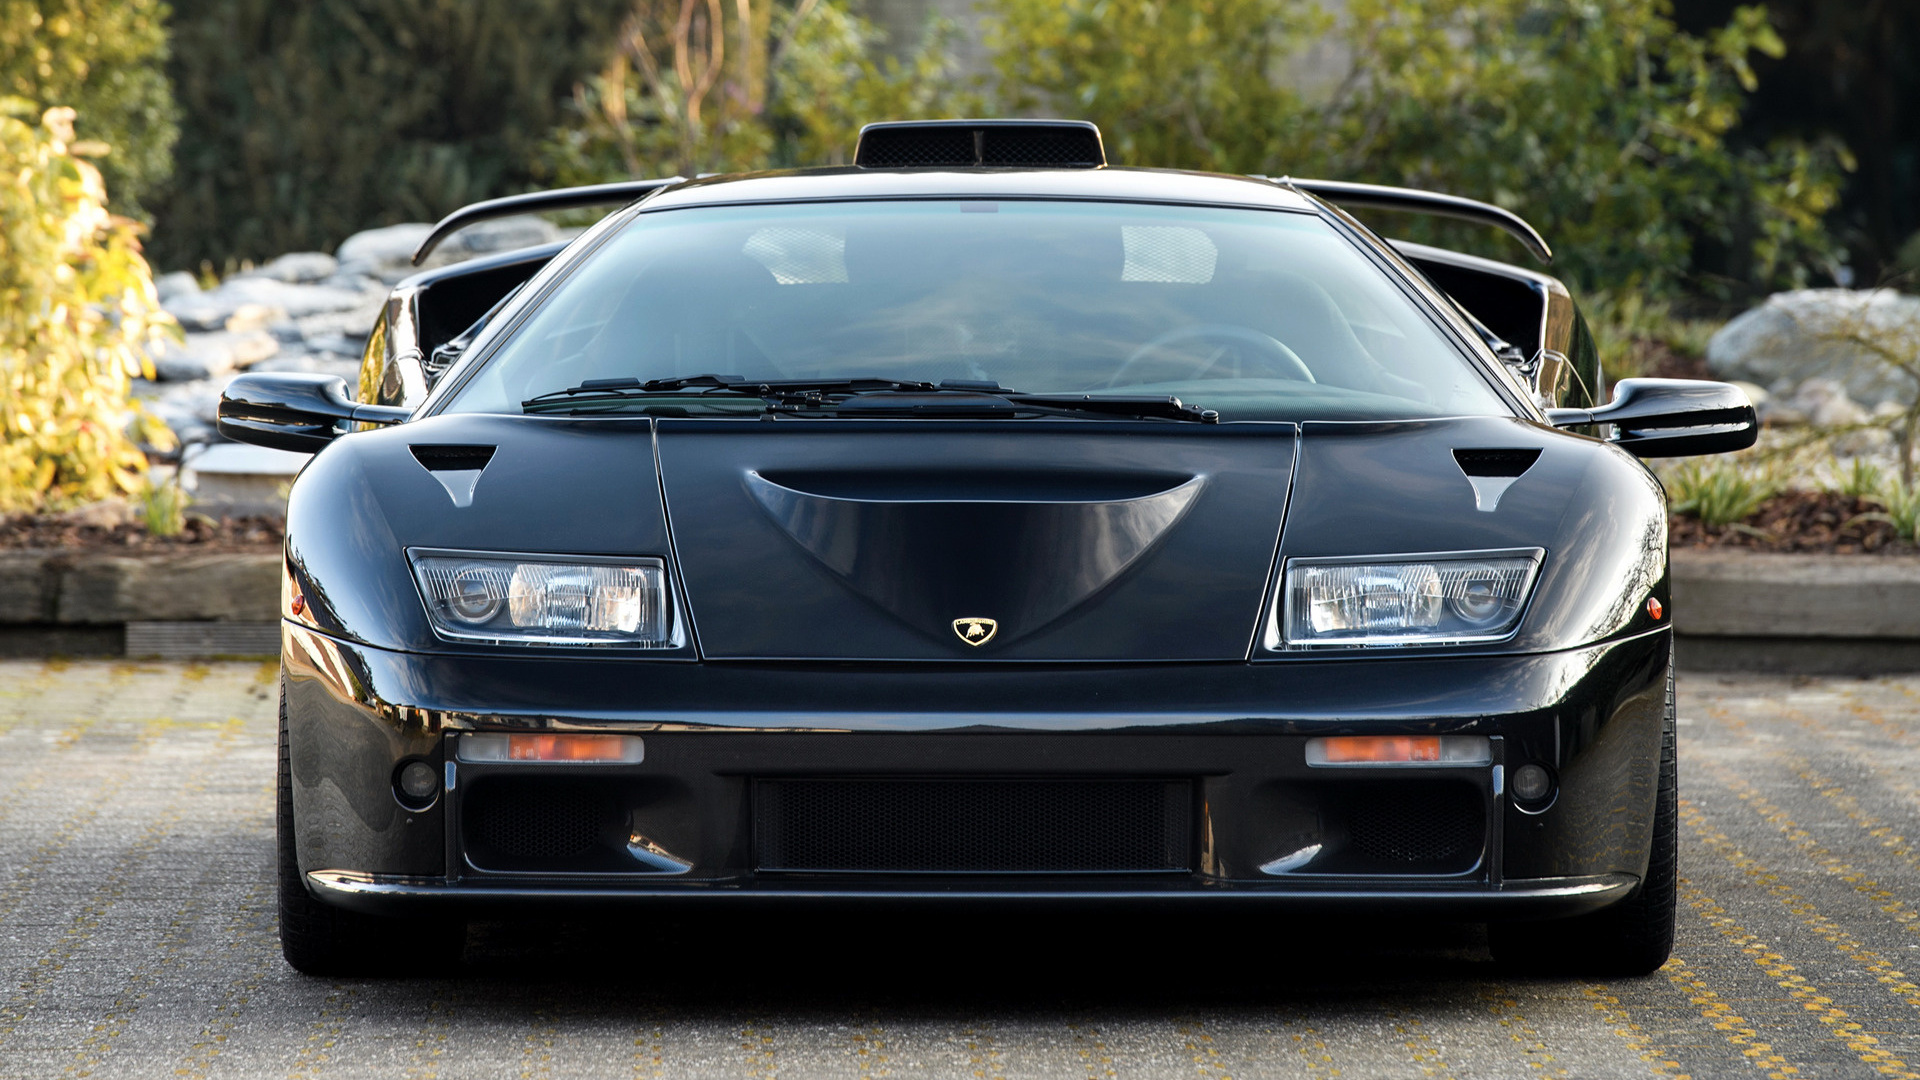 Lamborghini Diablo GT and HD Image